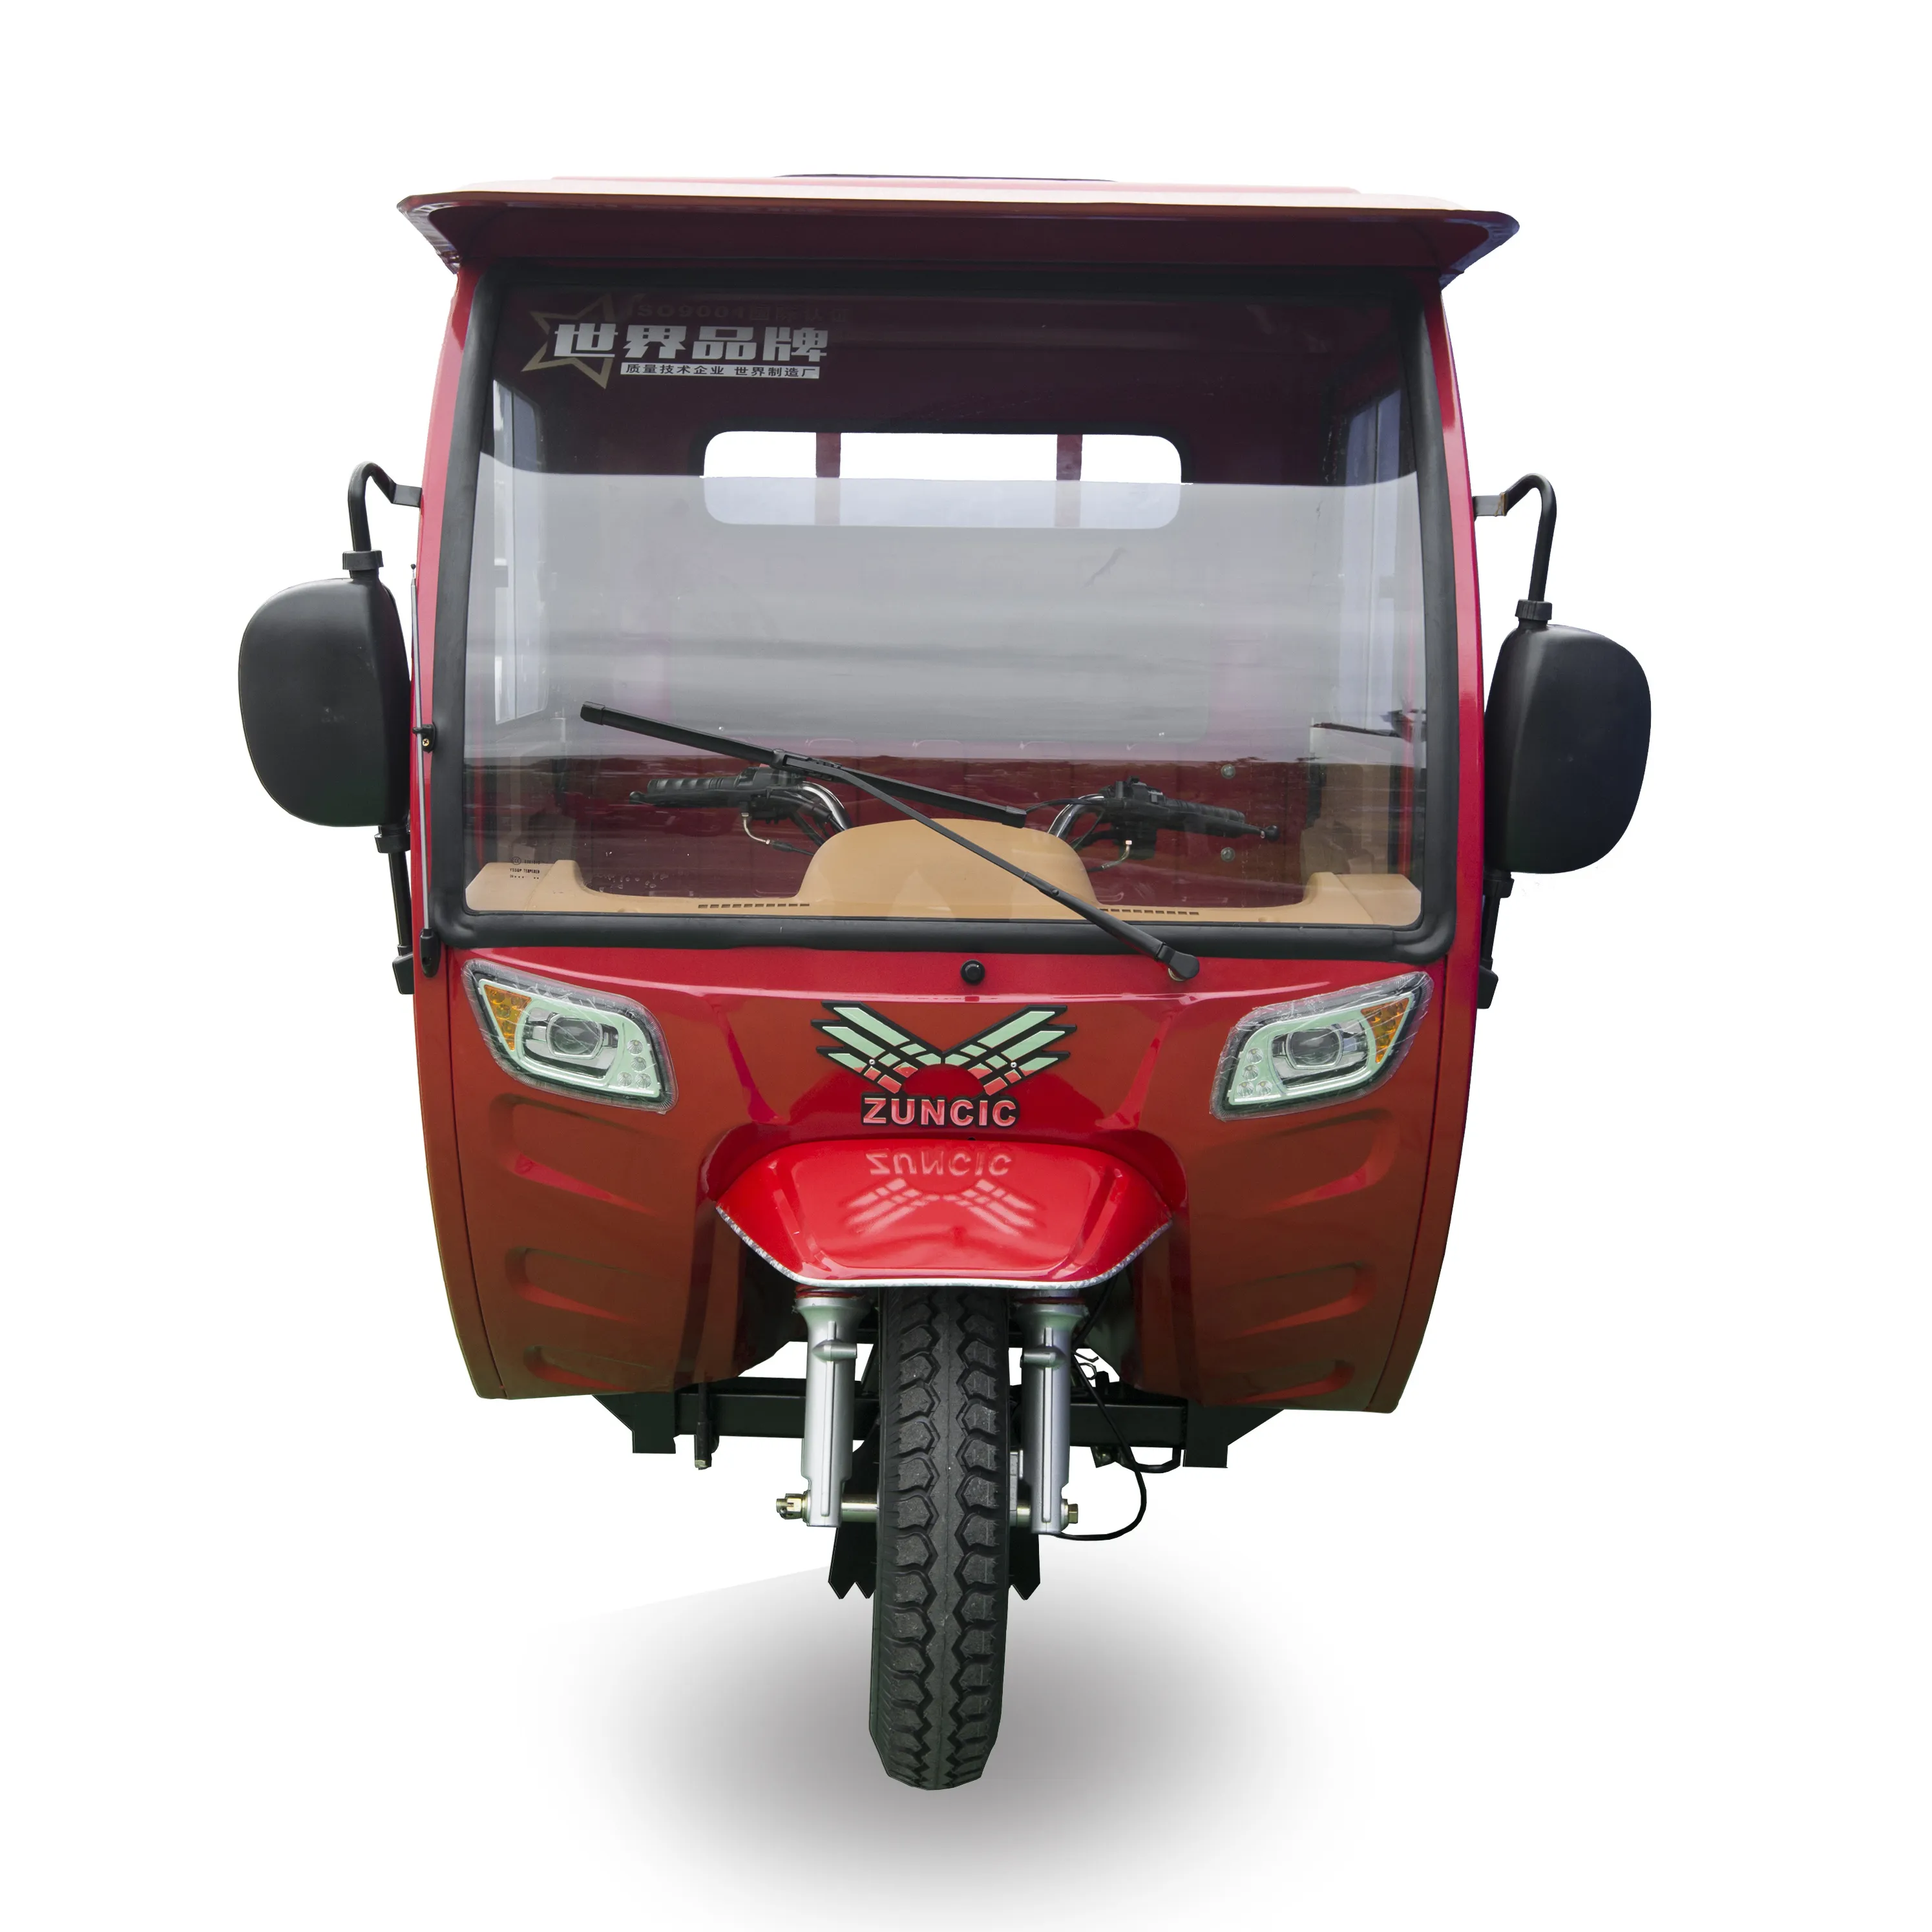 Üç tekerlekli motosiklet tuk tuk araba üç tekerlekli moto taksi